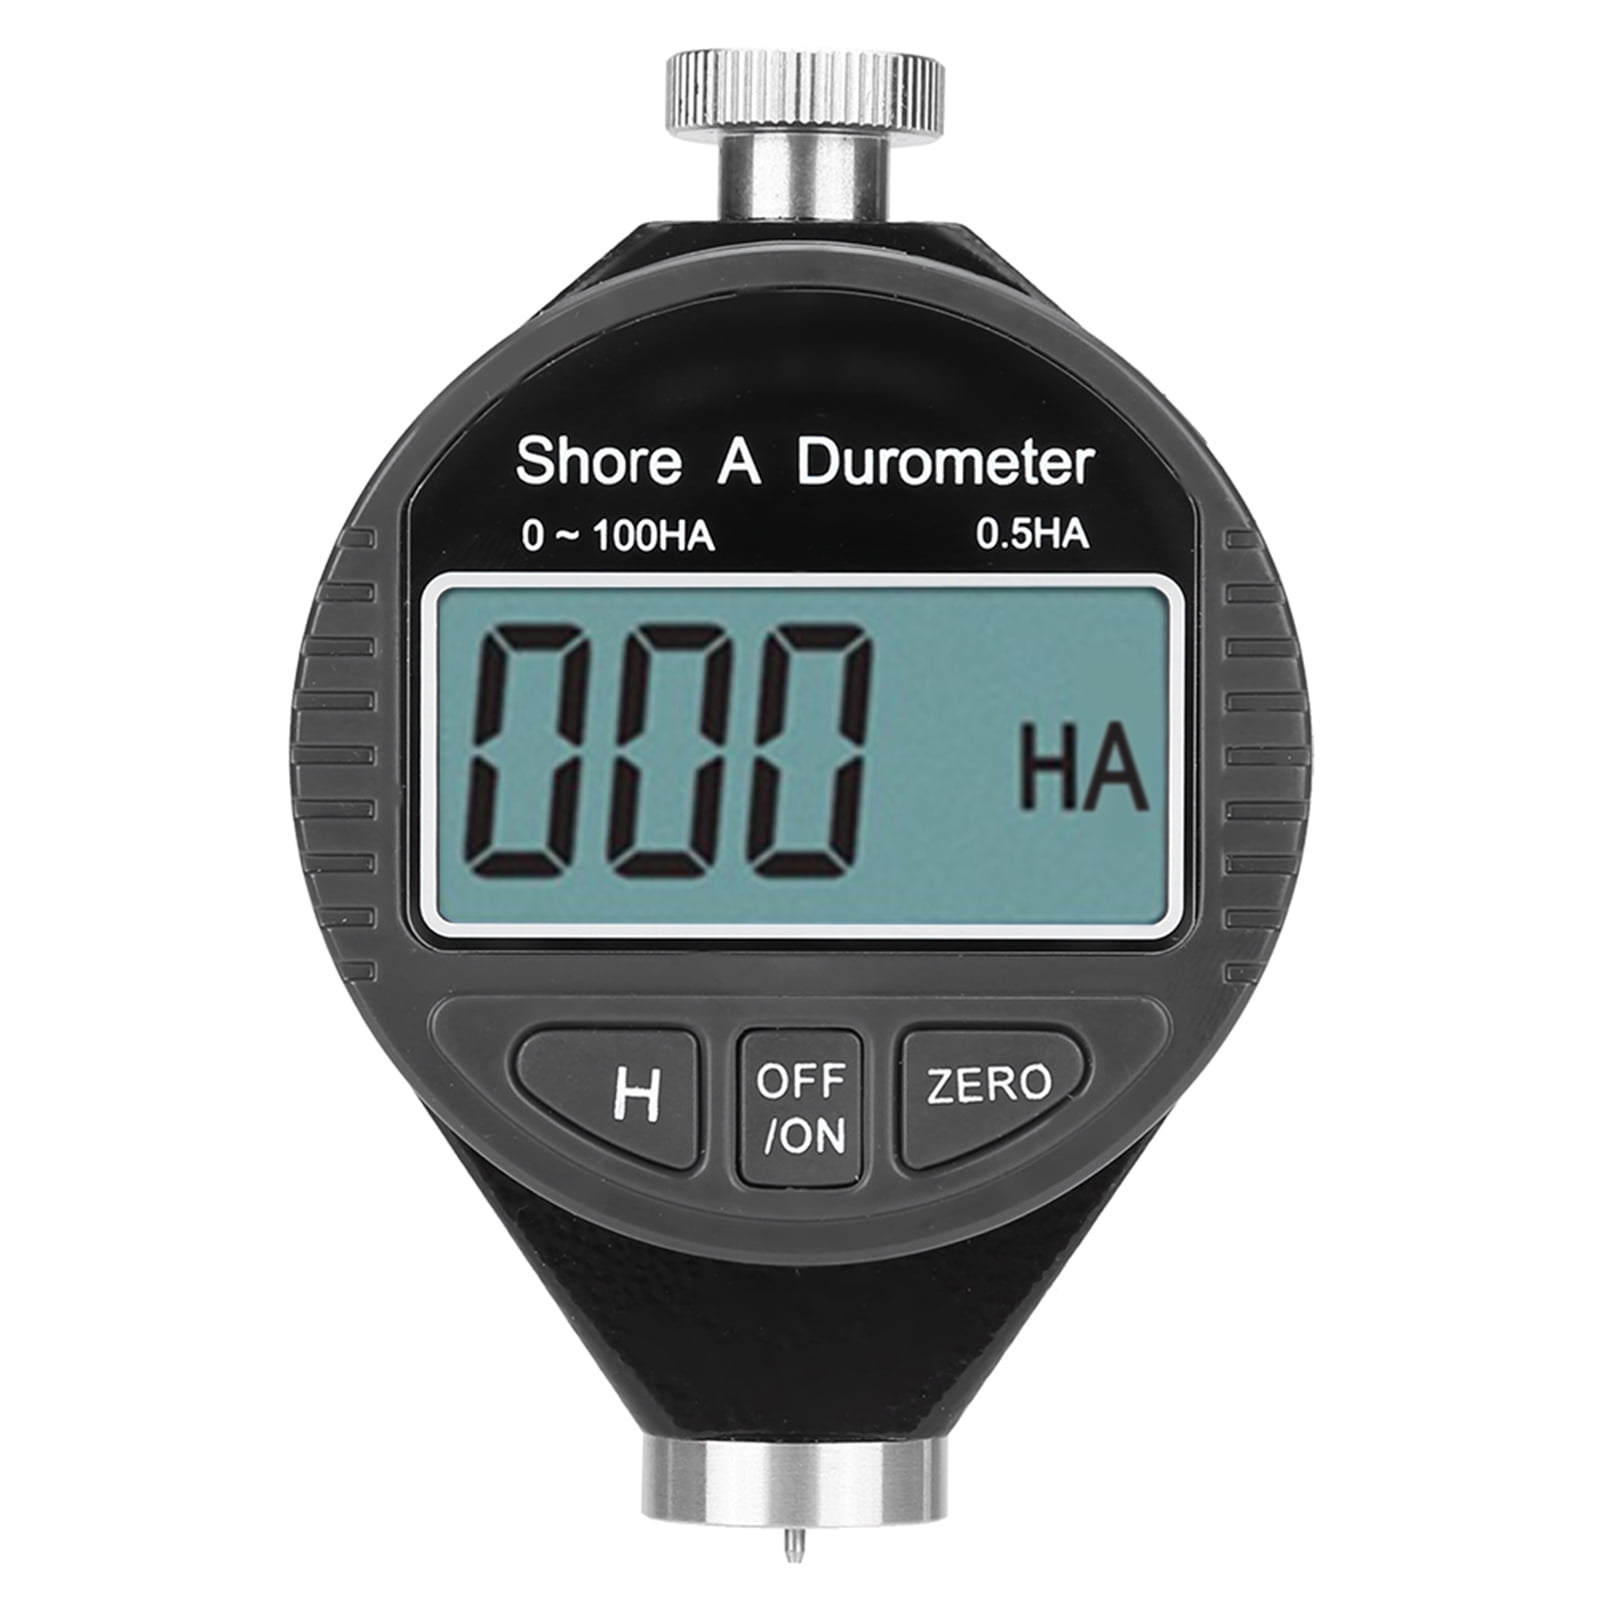 DSY Shore Tire Durometer Digital 100HD C Durometer Shore Rubber Hardness Tester LCD Display Meter measurering Tools Hardness Rubber Tester 